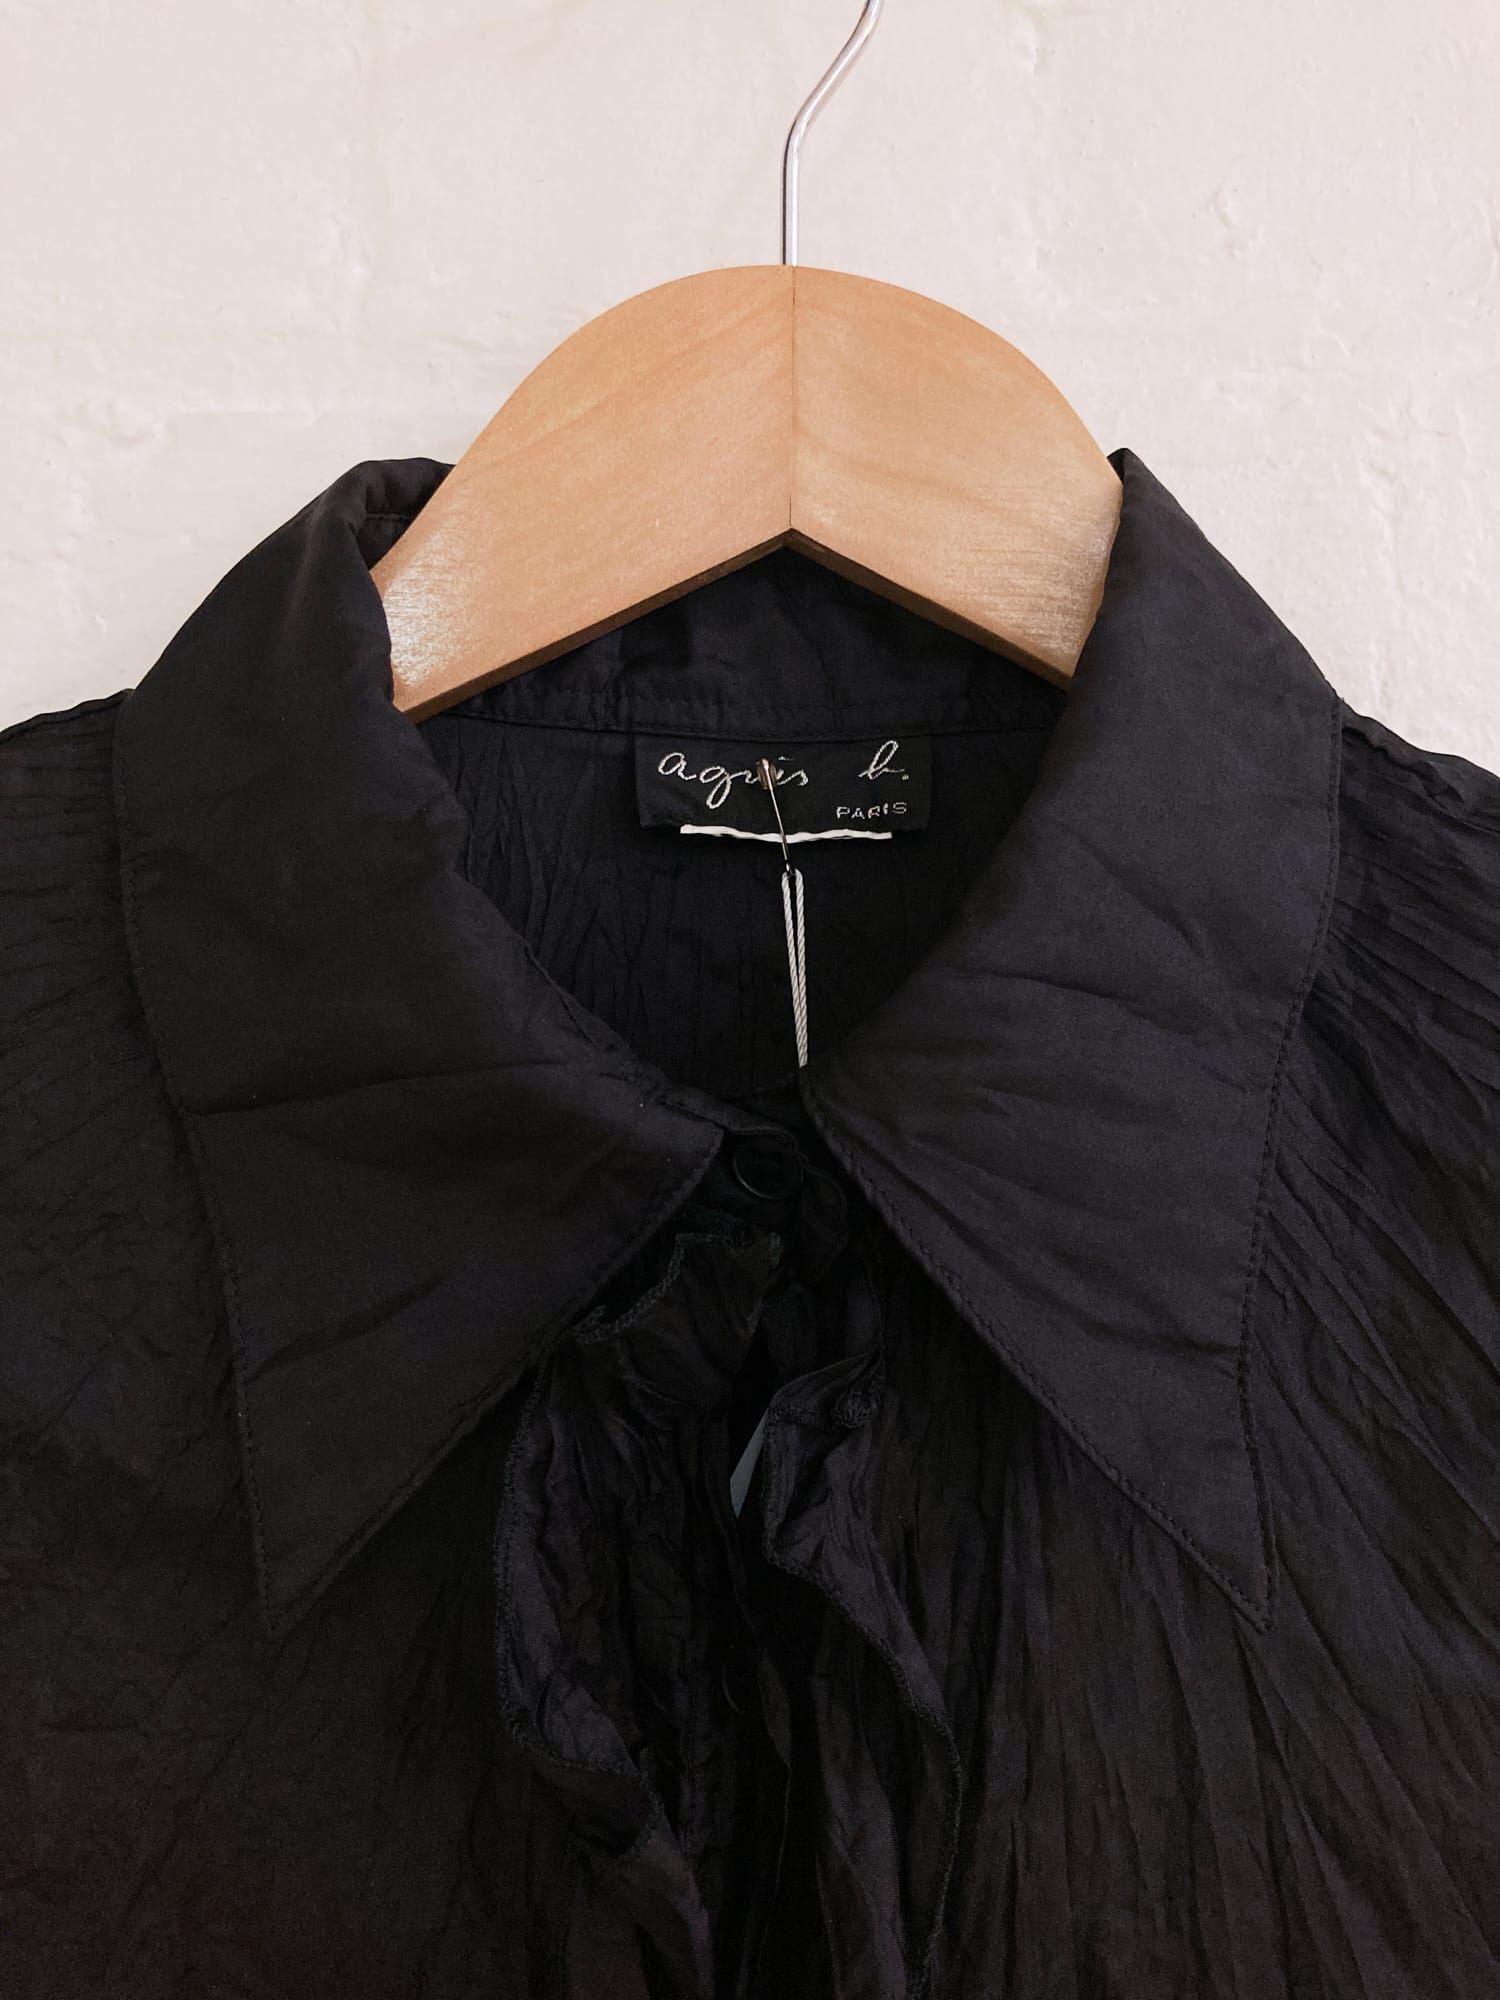 Agnes B Paris 1990s black creased silk shirt with collar ruffle